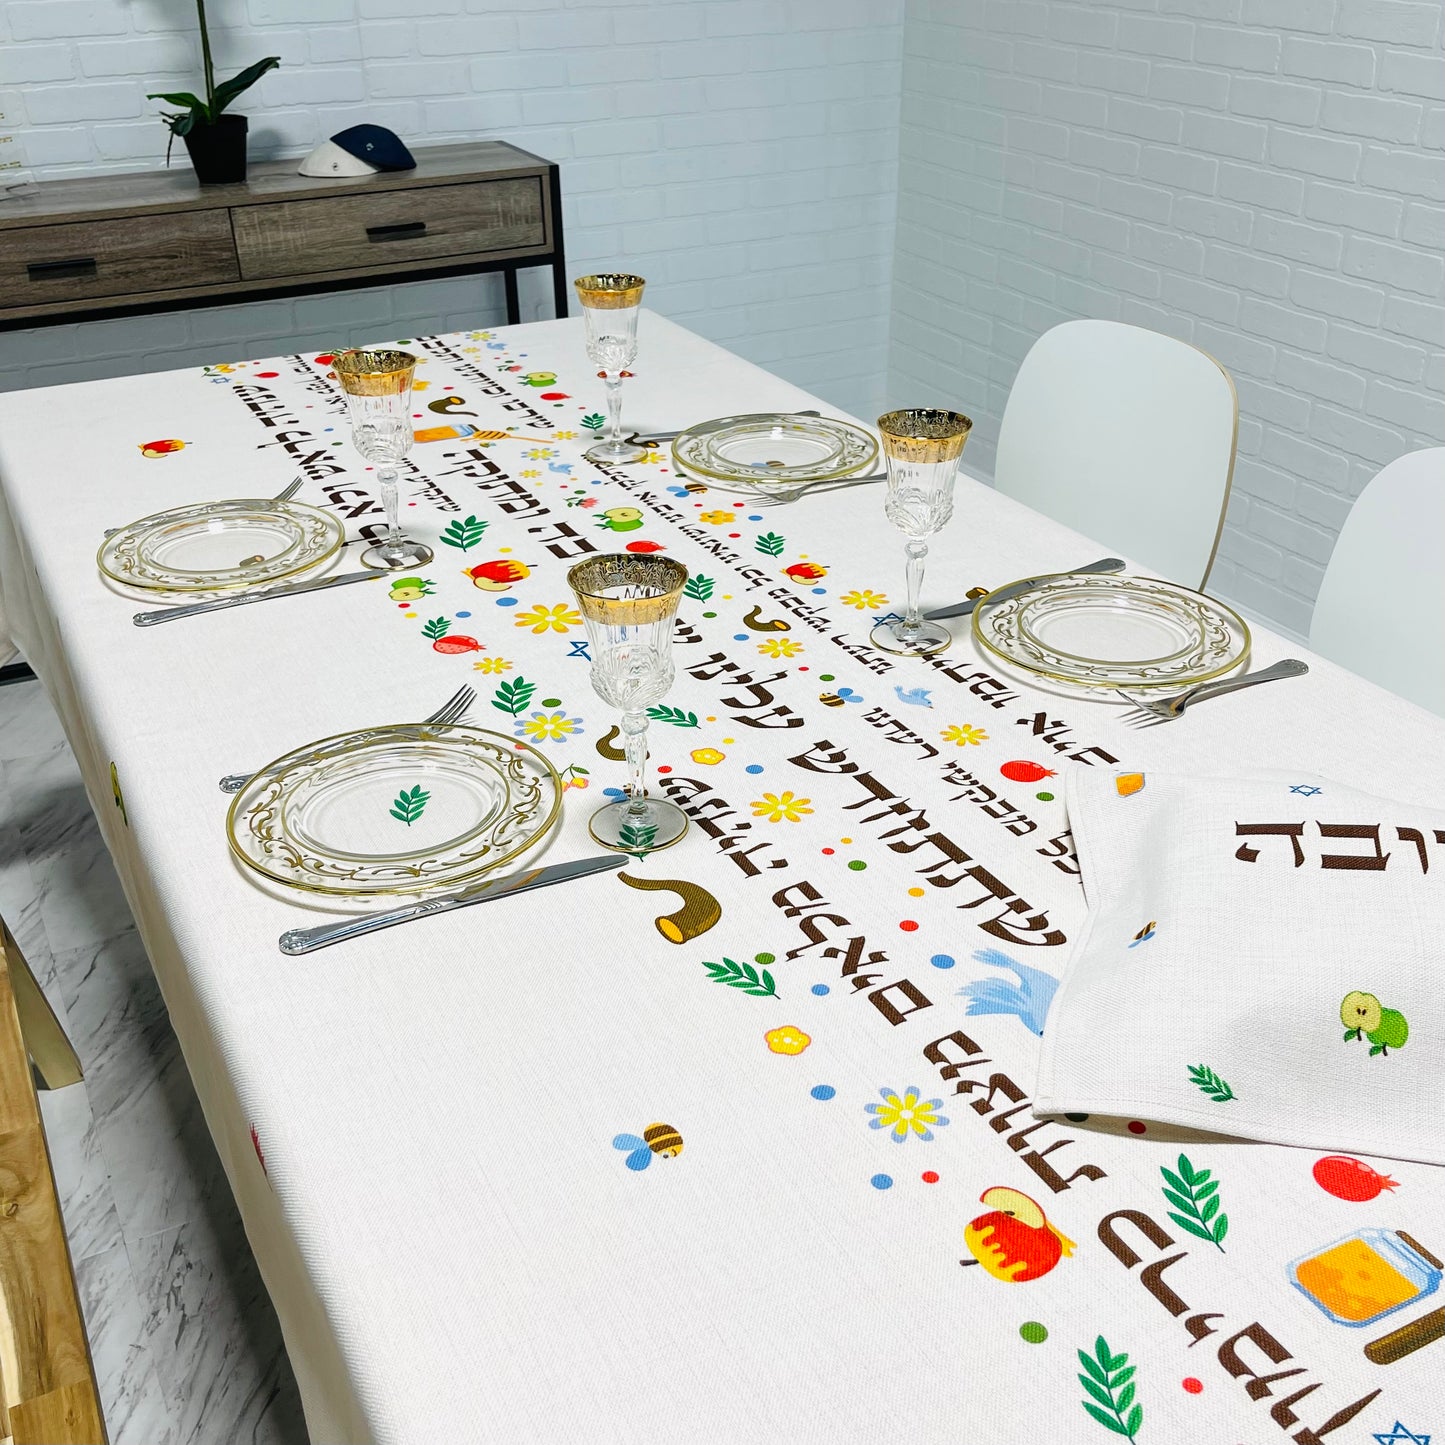 Rosh Hashana Seder Tablecloth. FREE Matching Challah Cover!